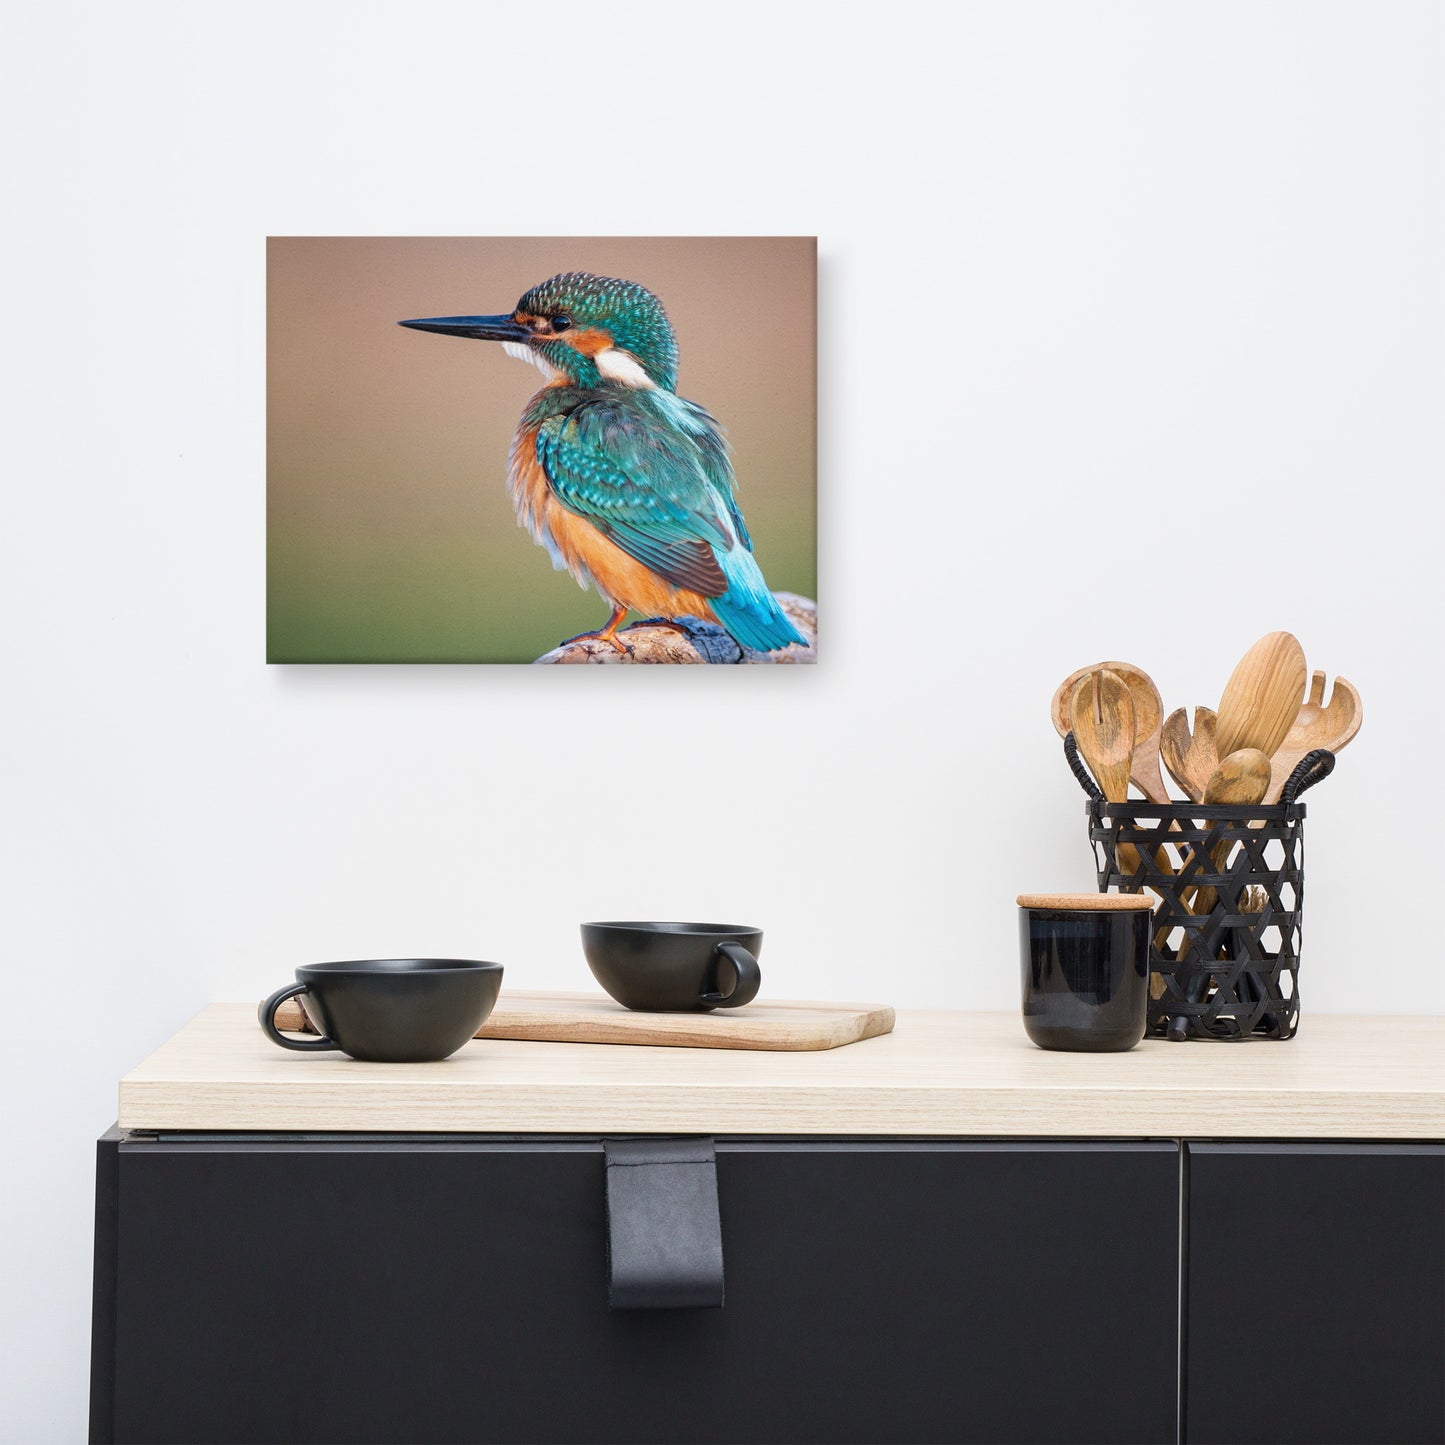 Common Kingfisher Bird on Perch Animal Wildlife Photograph Canvas Wall Art Prints